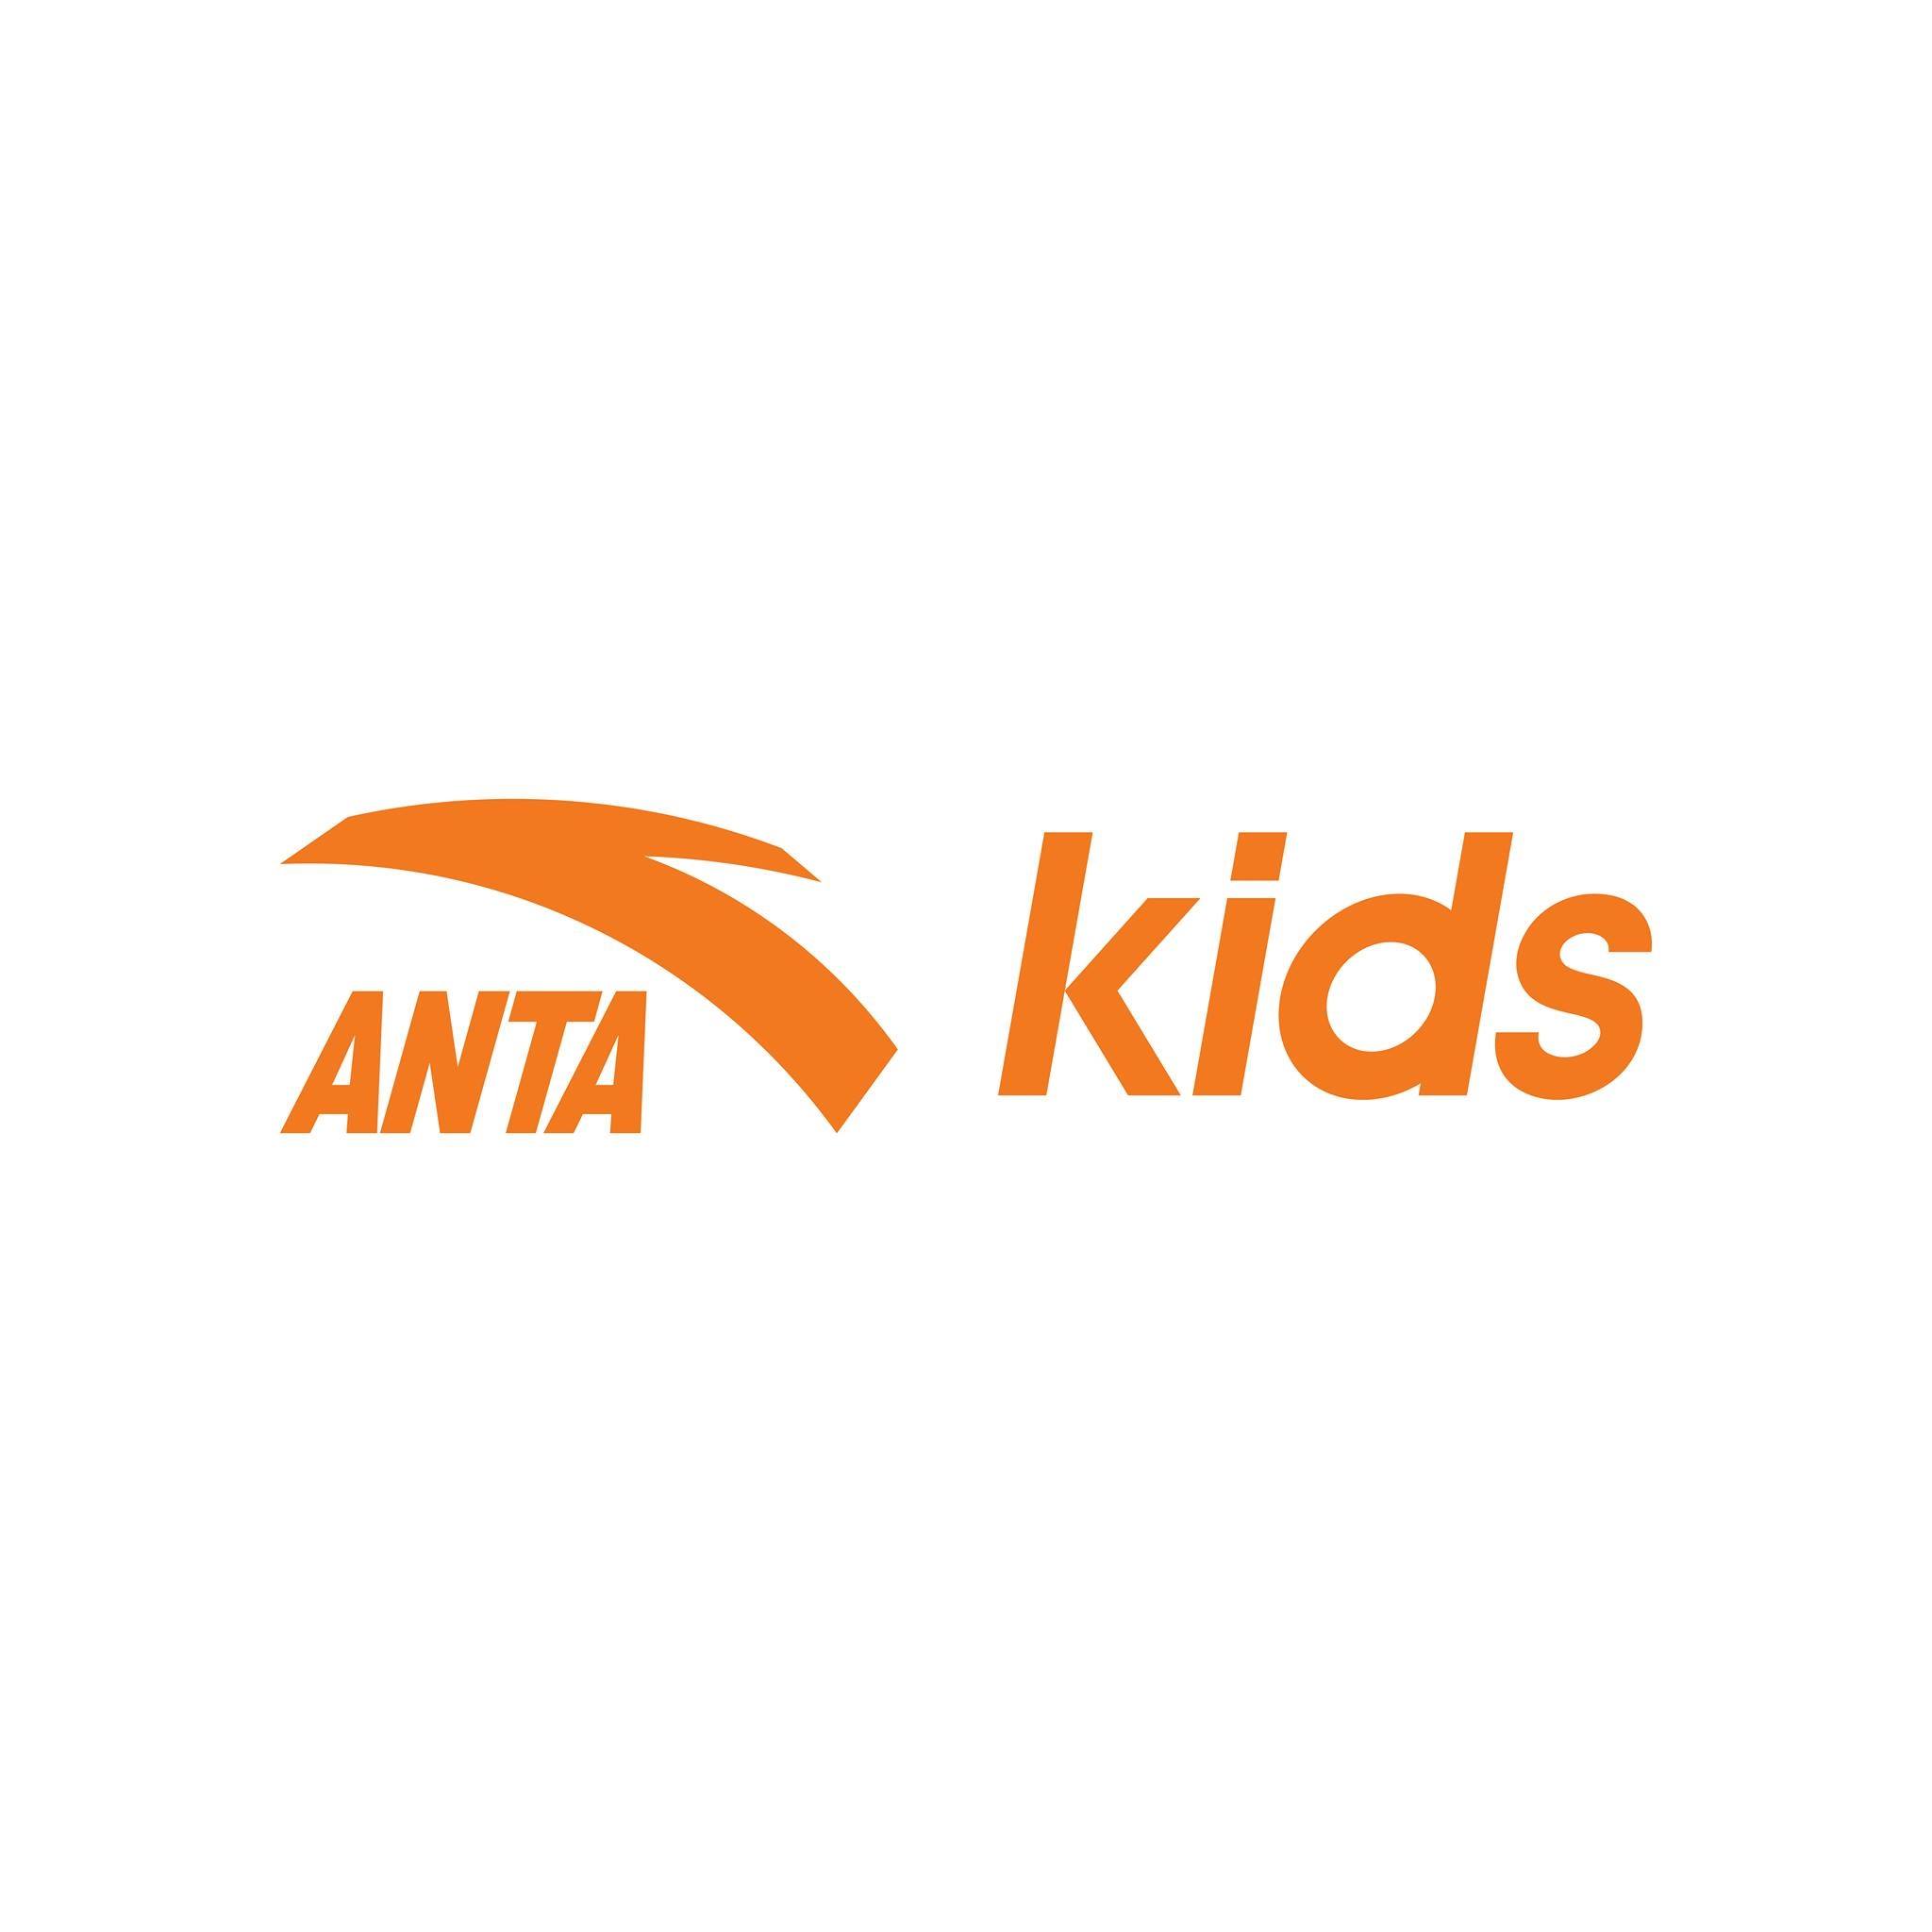 Anta Kids